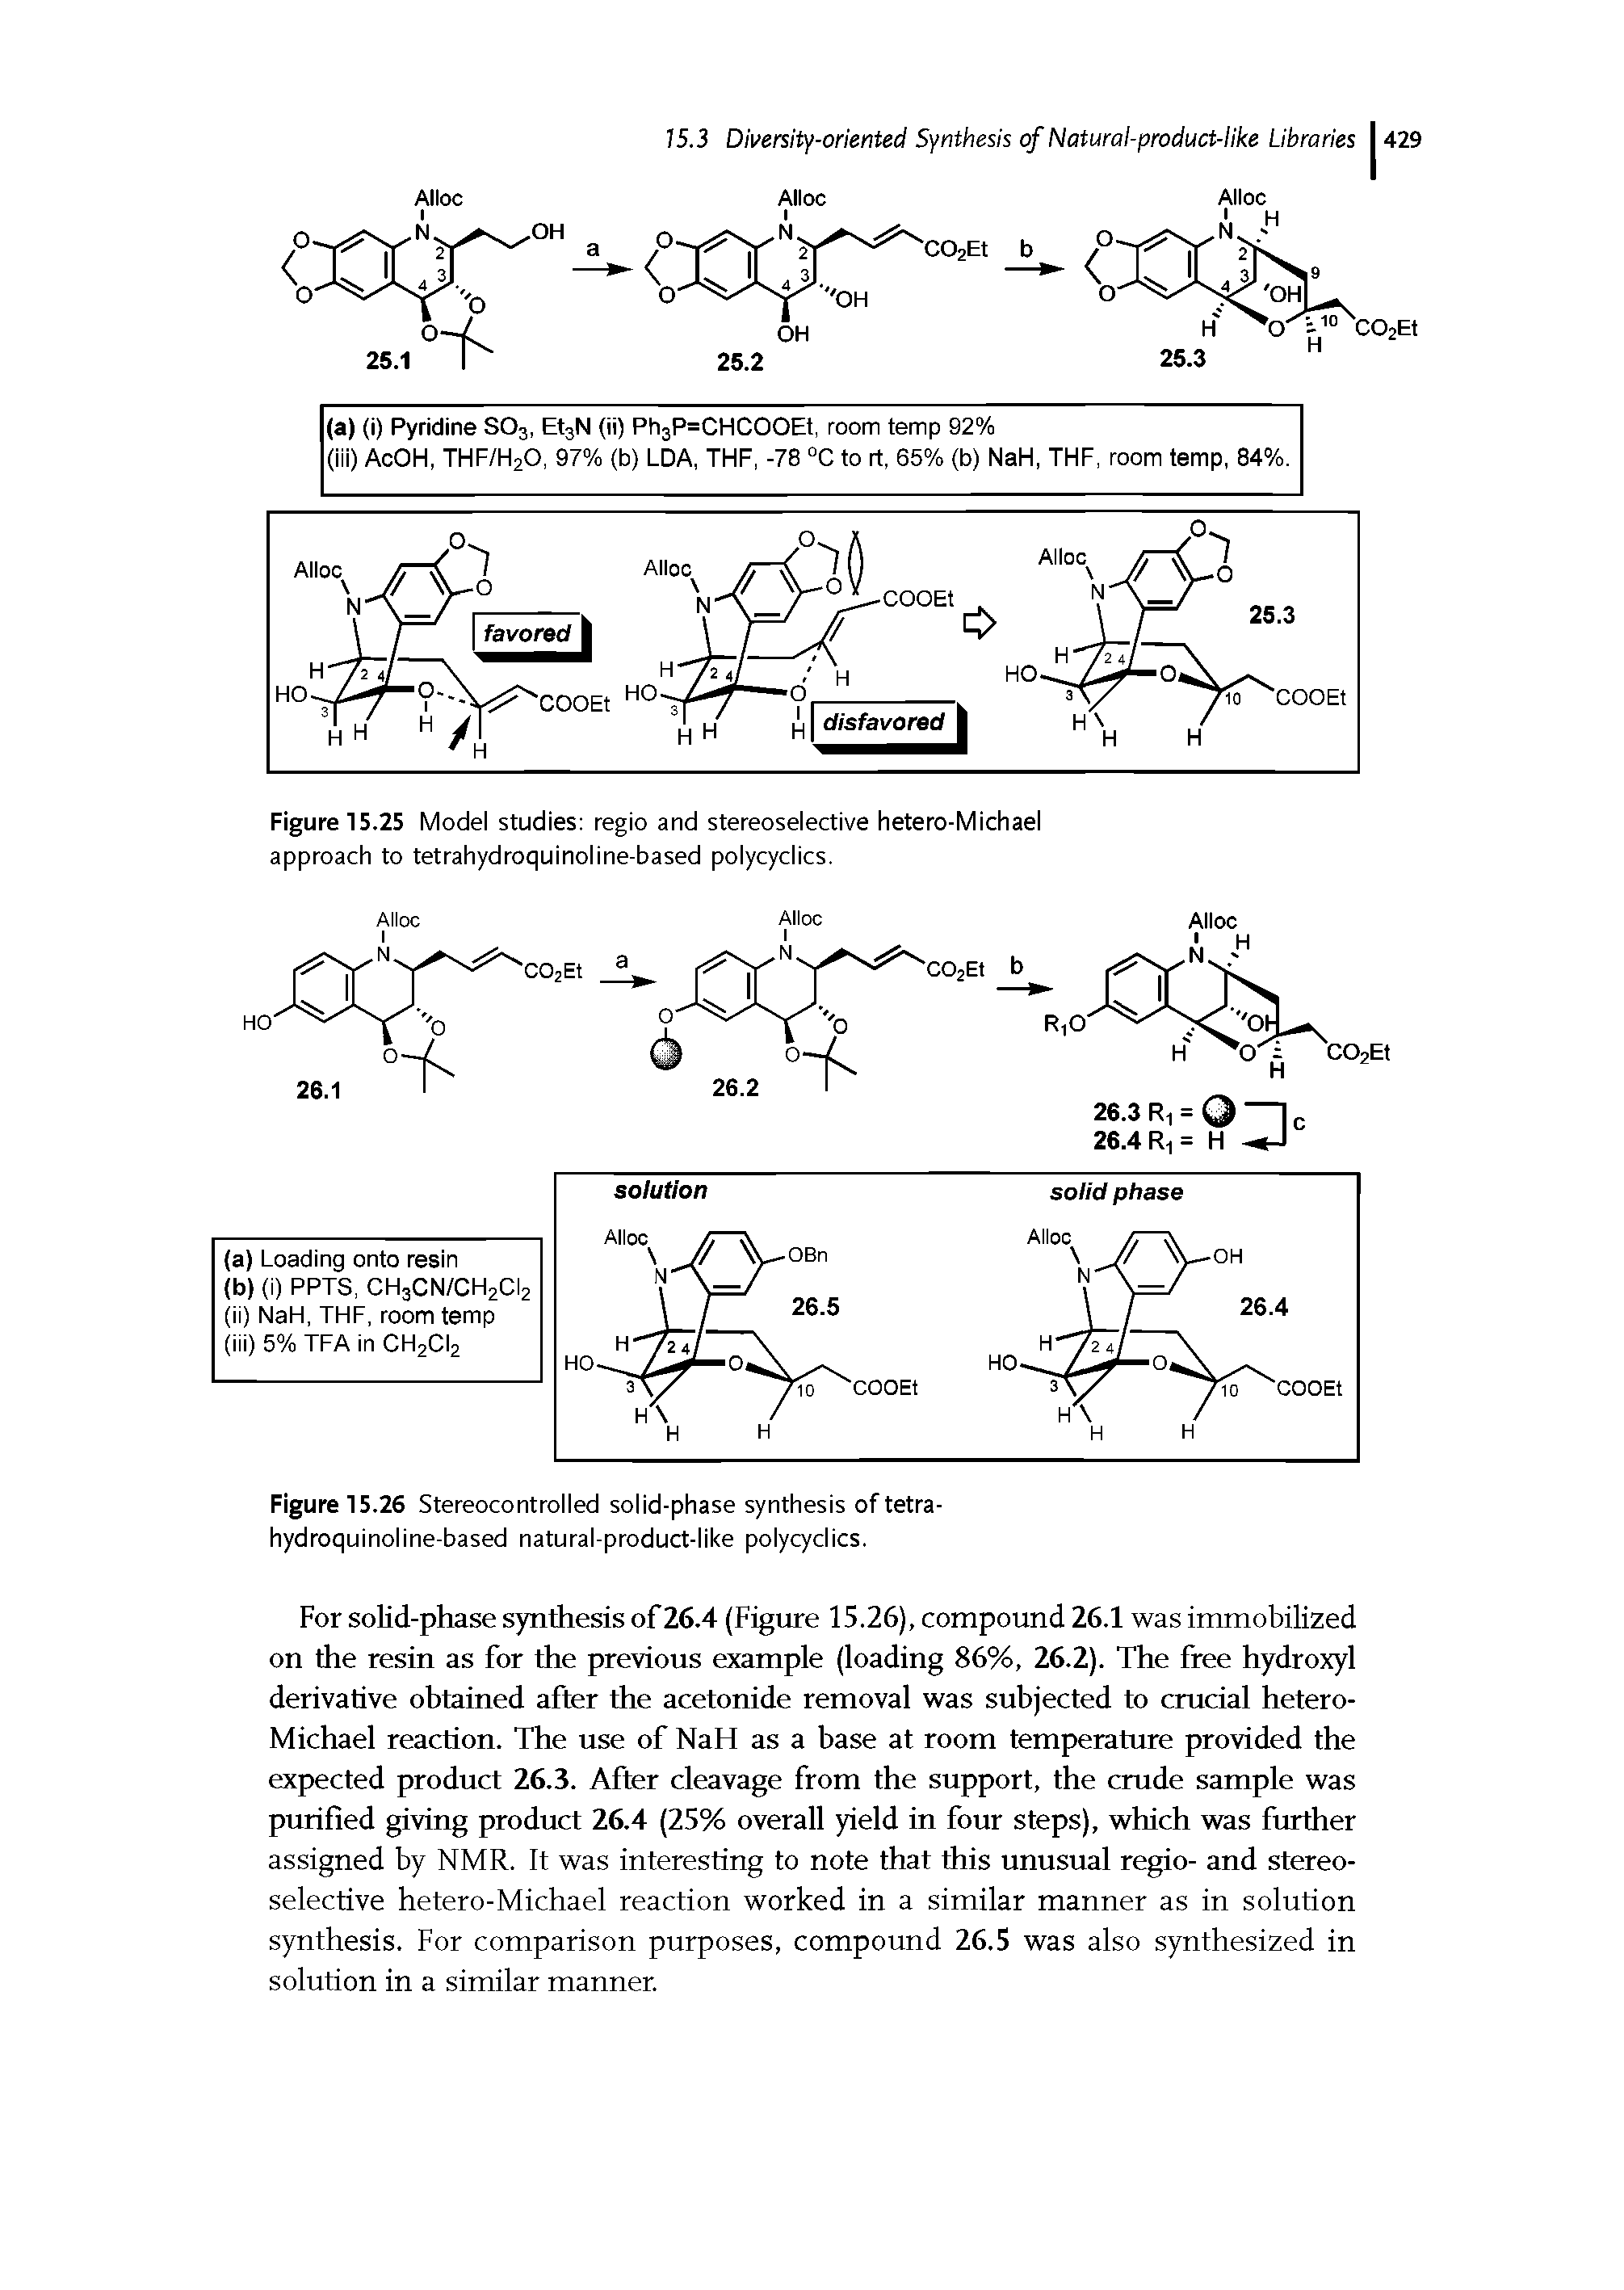 Figure 15.25 Model studies regio and stereoselective hetero-Michael approach to tetrahydroquinoline-based polycyclics.